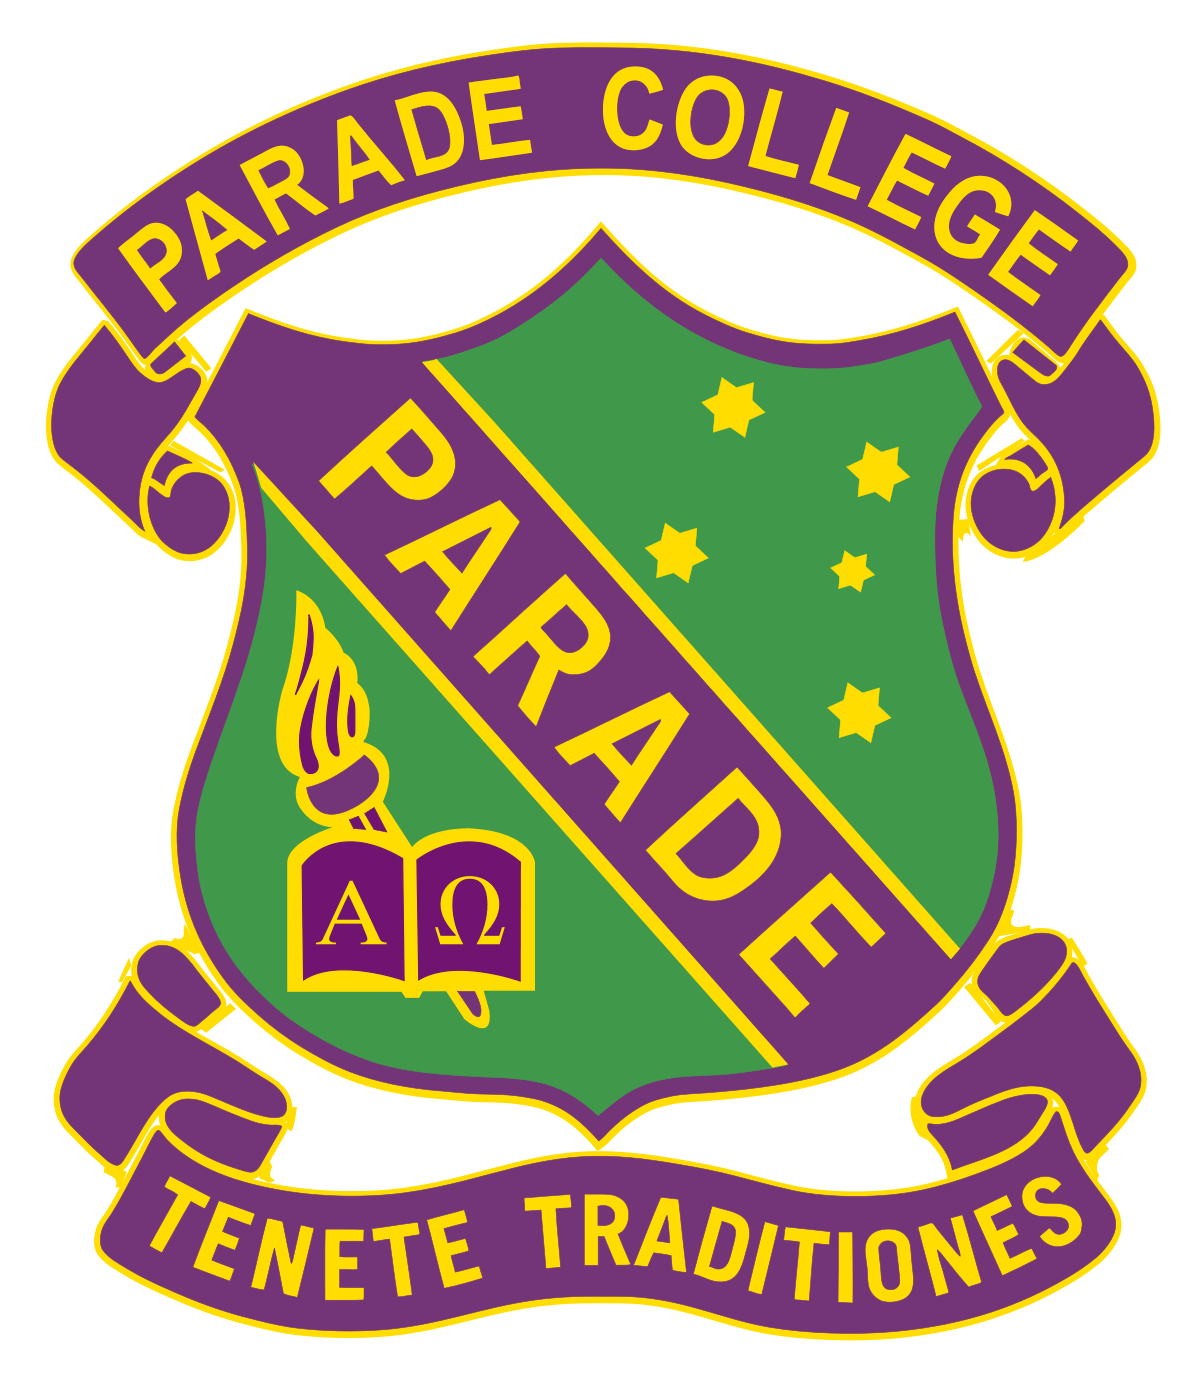 College Greens Logo - Parade College